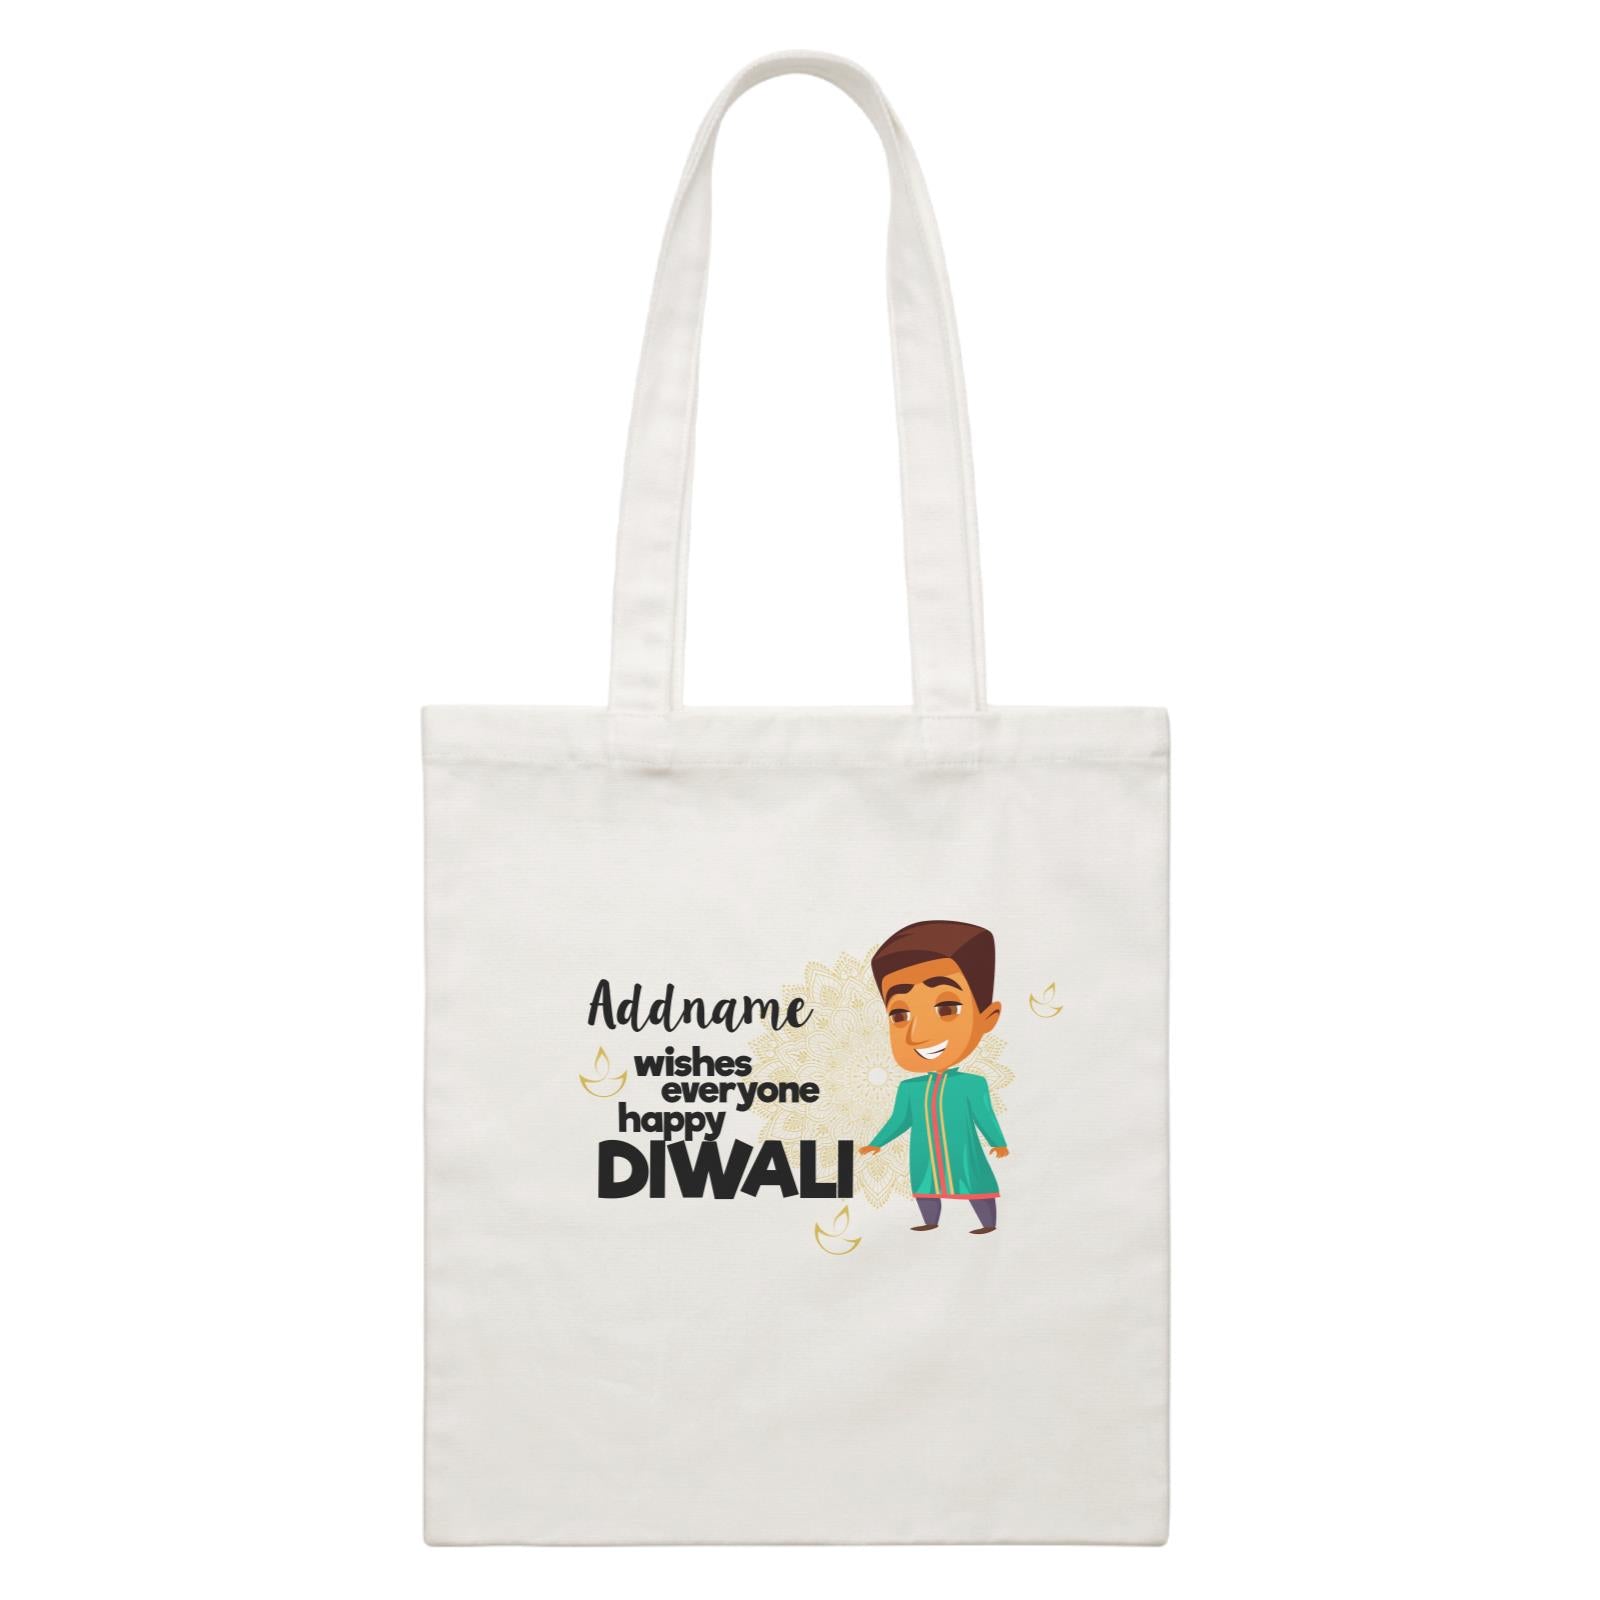 Cute Man Wishes Everyone Happy Diwali Addname White Canvas Bag